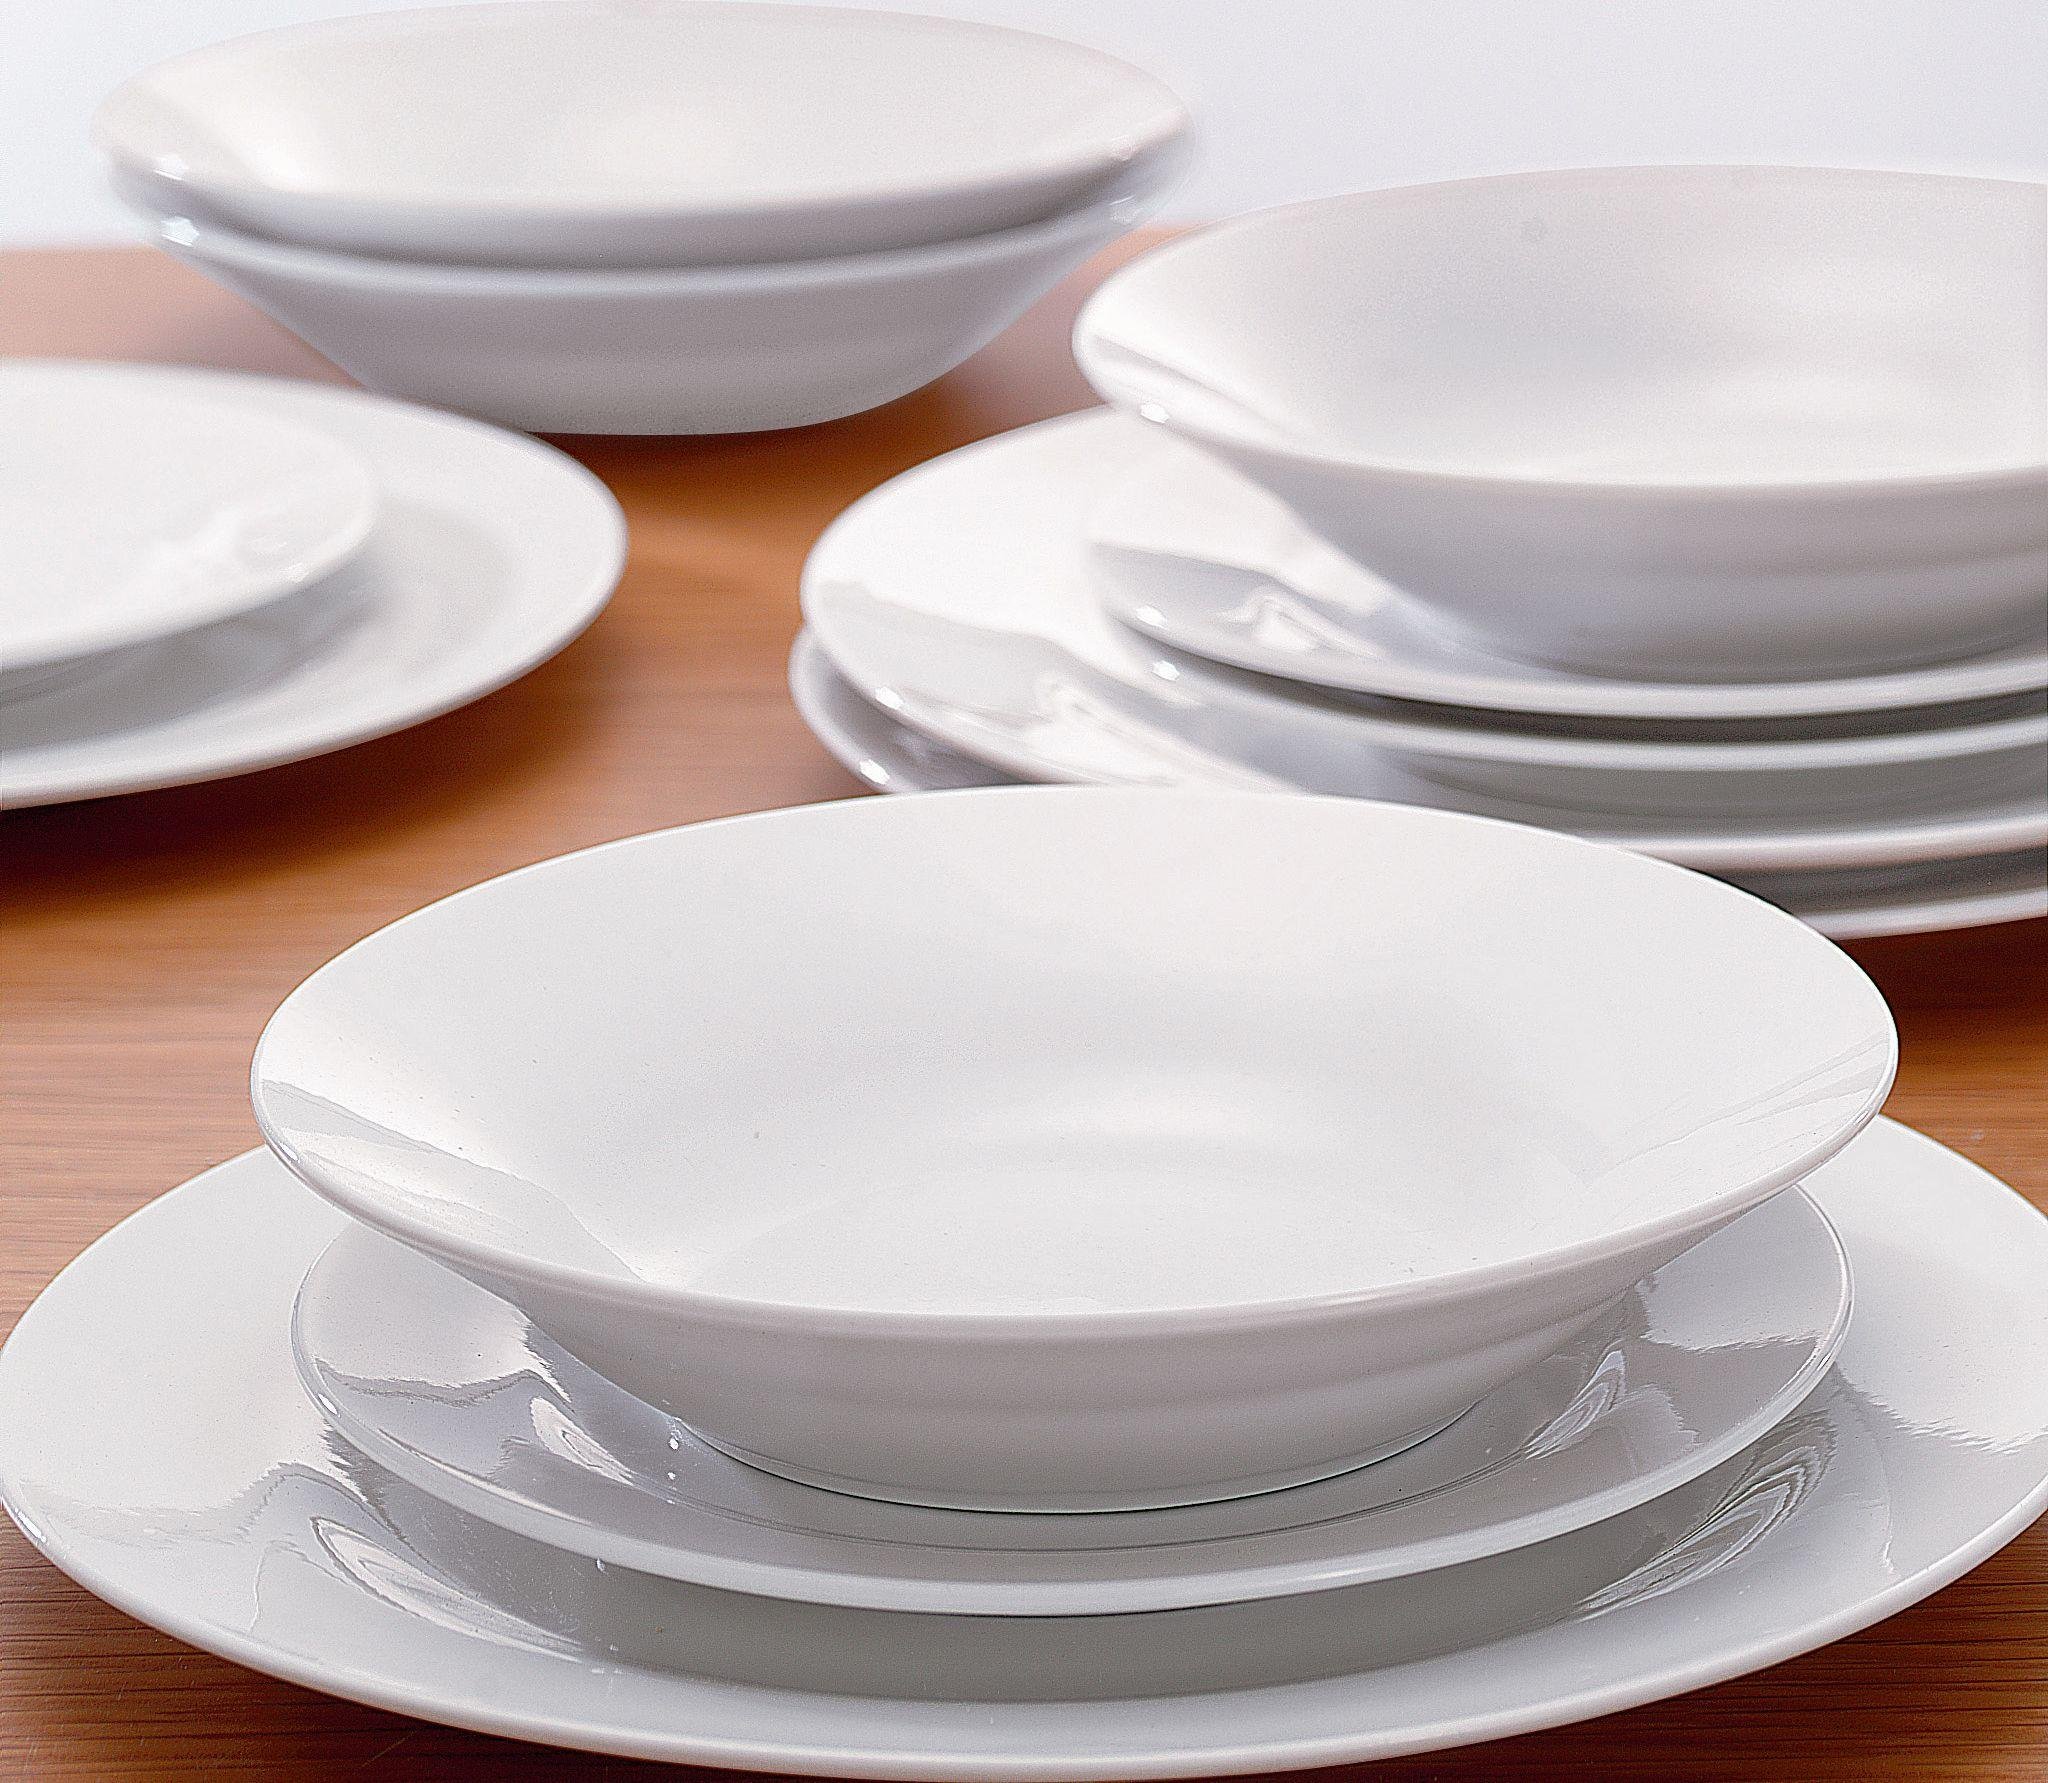 Simple Value by Argos 12 Piece Porcelain Dinner Set